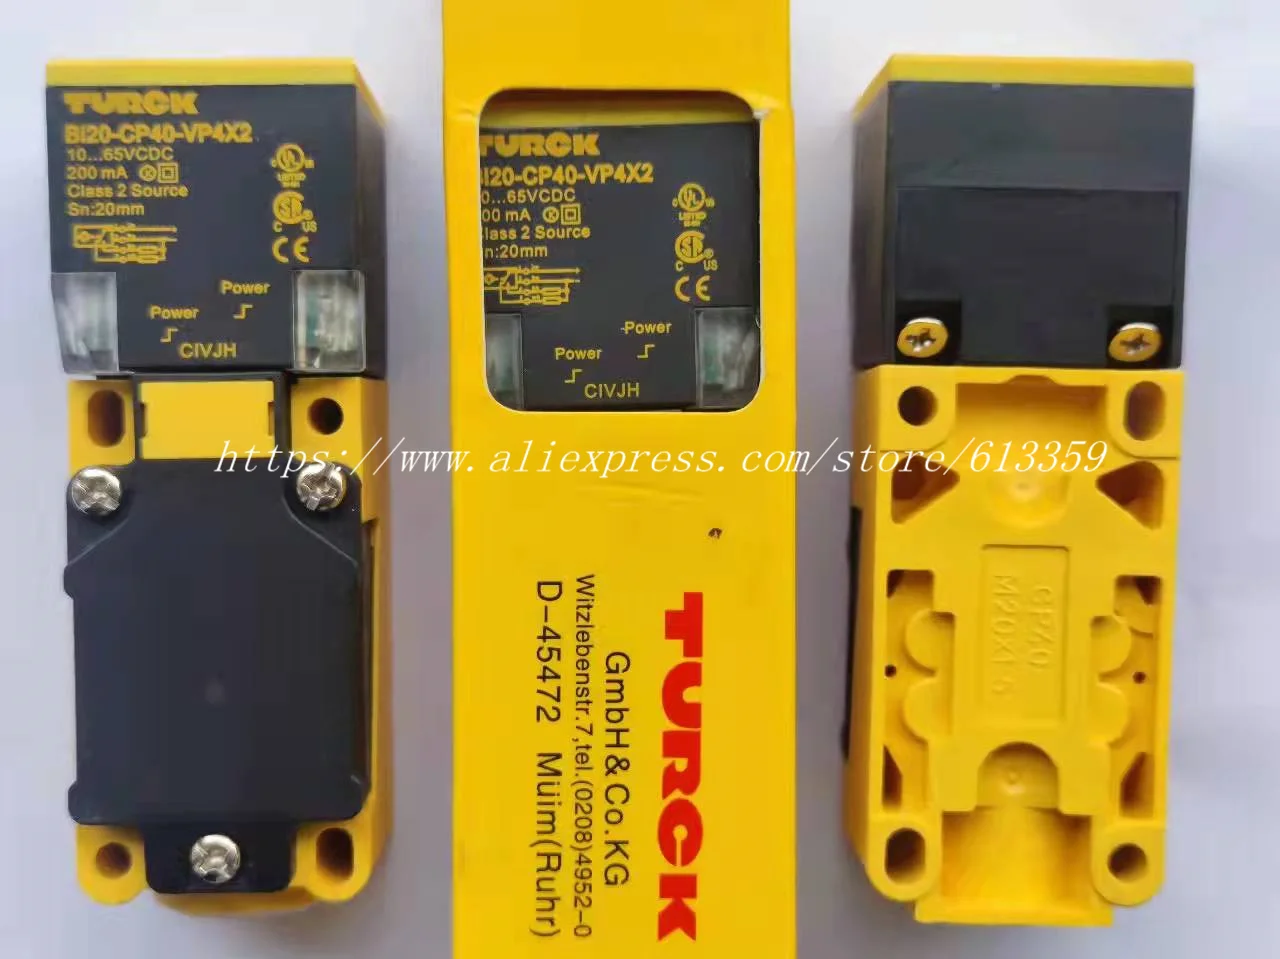 Brand New TURCK NI20NF-CP40-VP4X2-H1141 Proximity Switch Sensor 